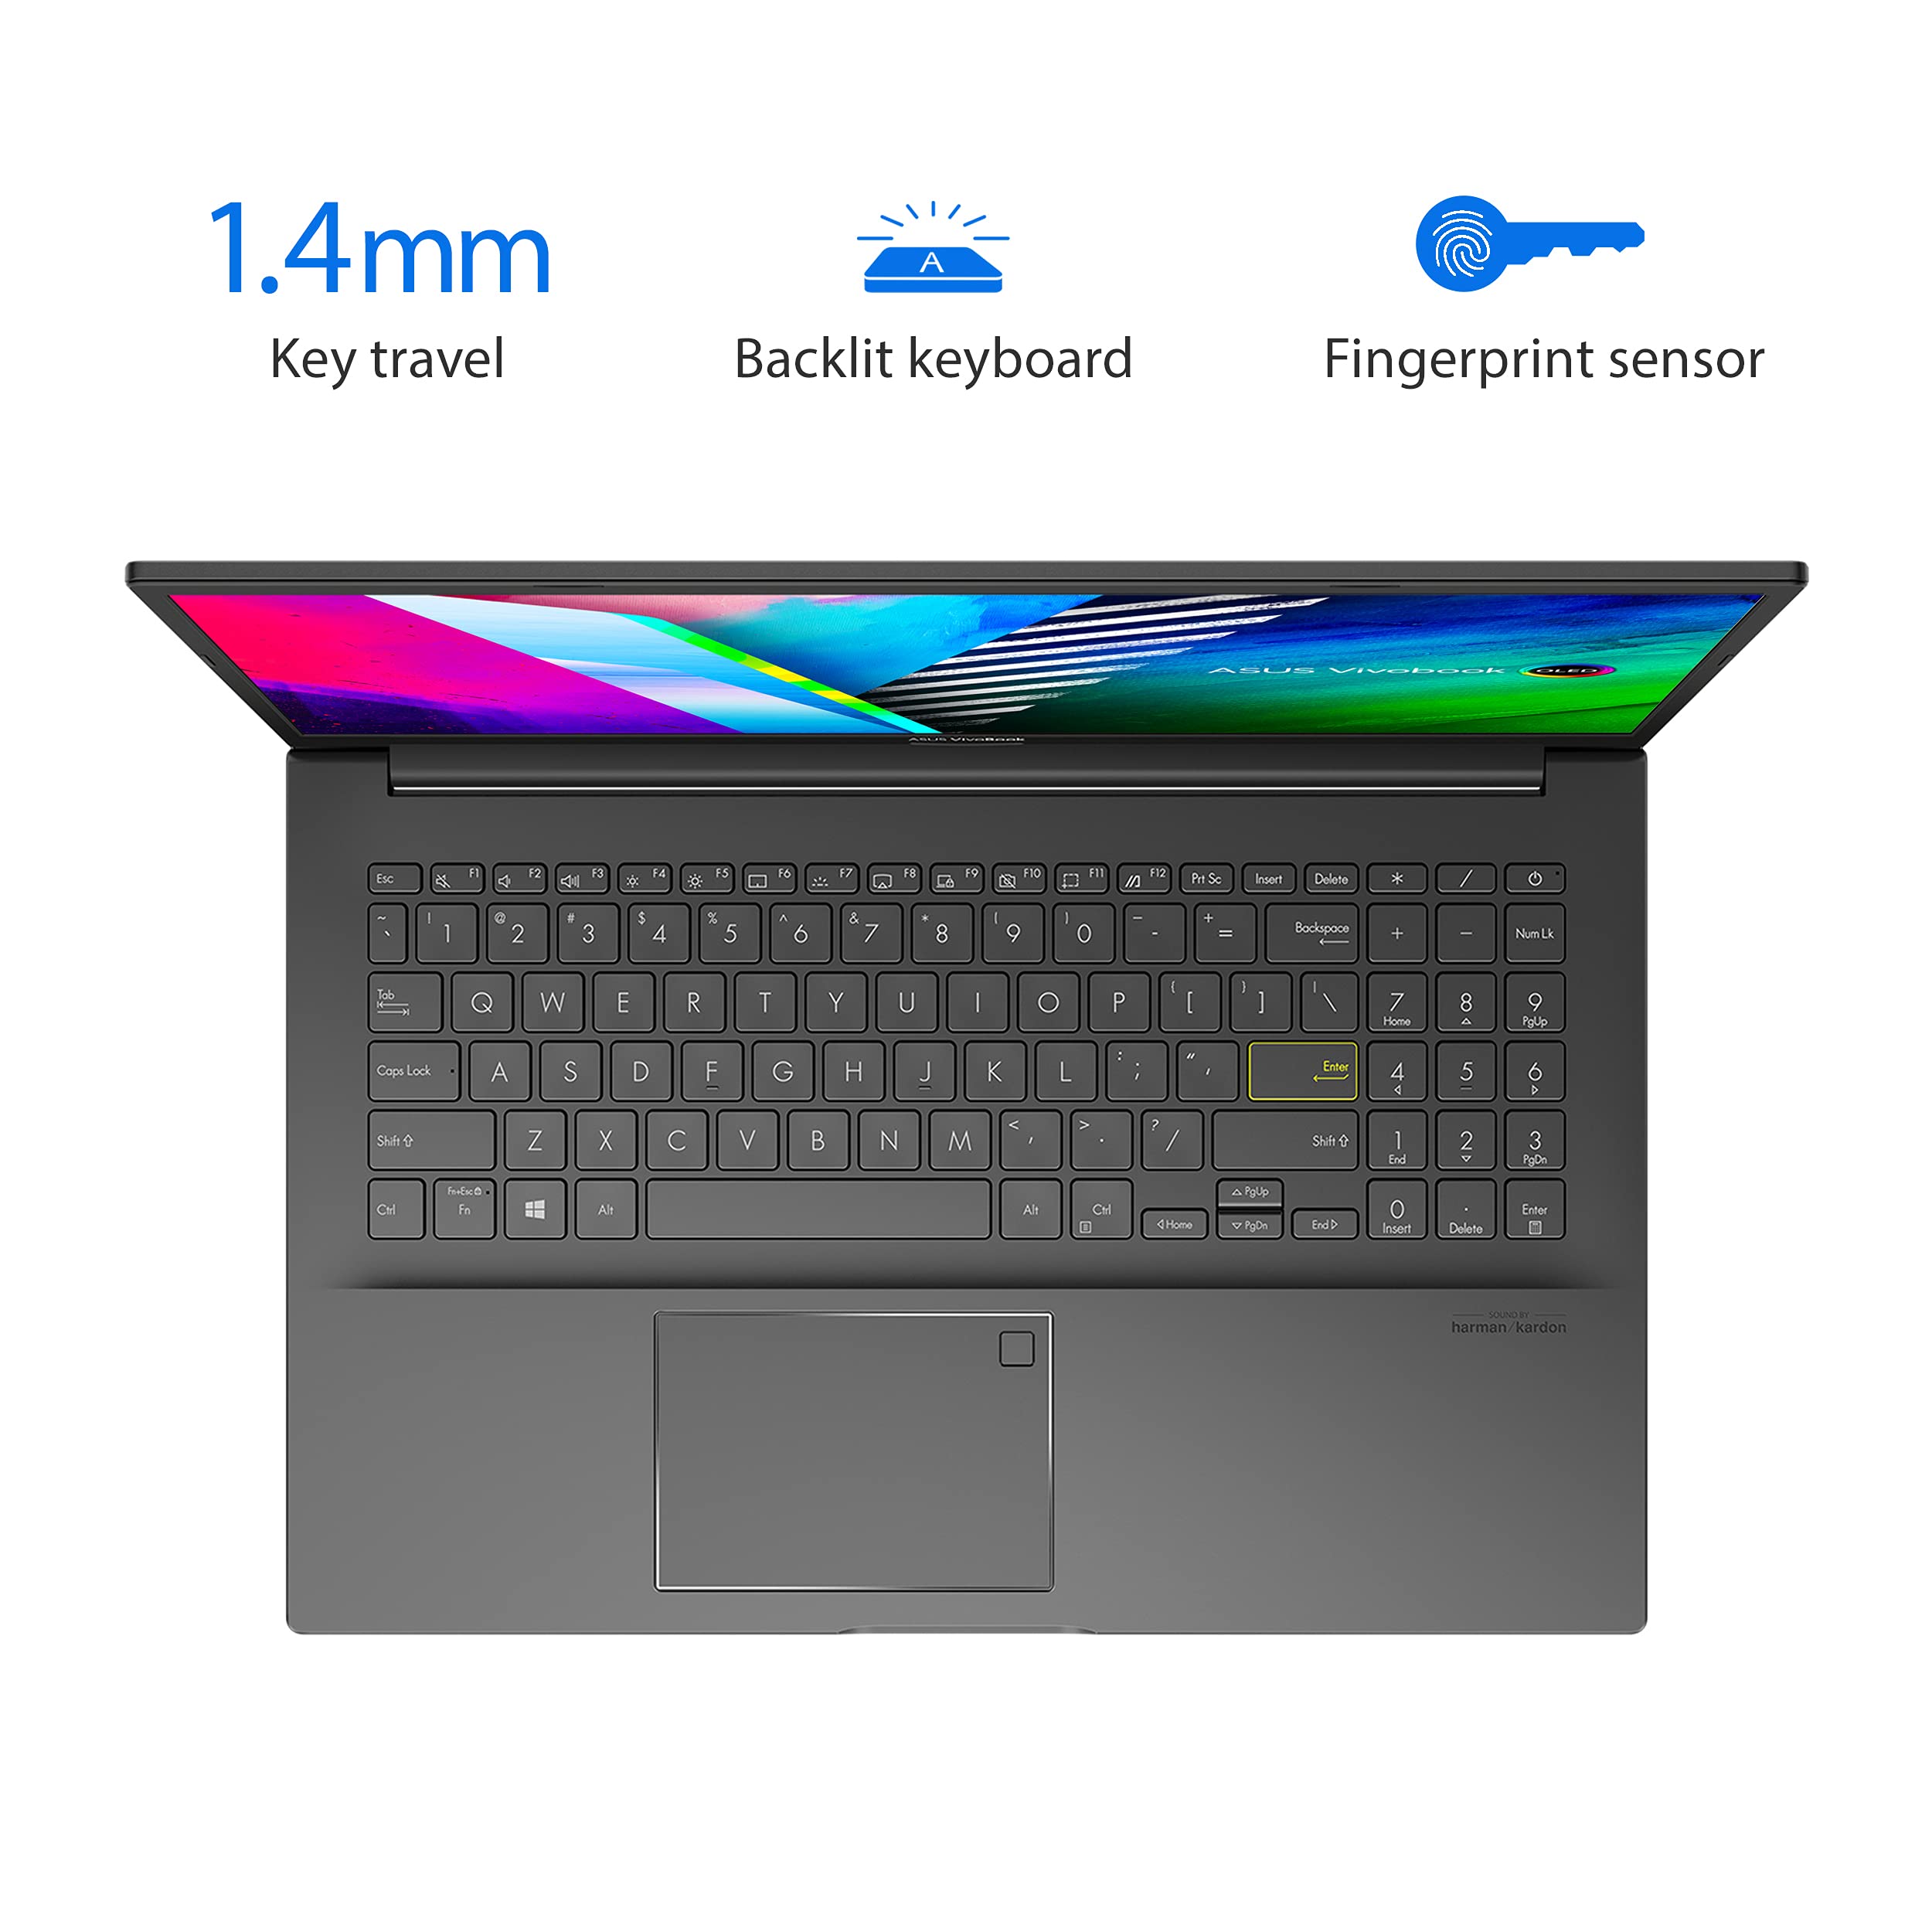 ASUS VivoBook 15 OLED K513 Thin & Light Laptop, 15.6 OLED Display, Intel i5-1135G7 CPU, Intel Iris Xe Graphics, 12GB RAM, 512GB PCIe SSD, Fingerprint Reader, Windows 10 Home, Indie Black, K513EA-AB54